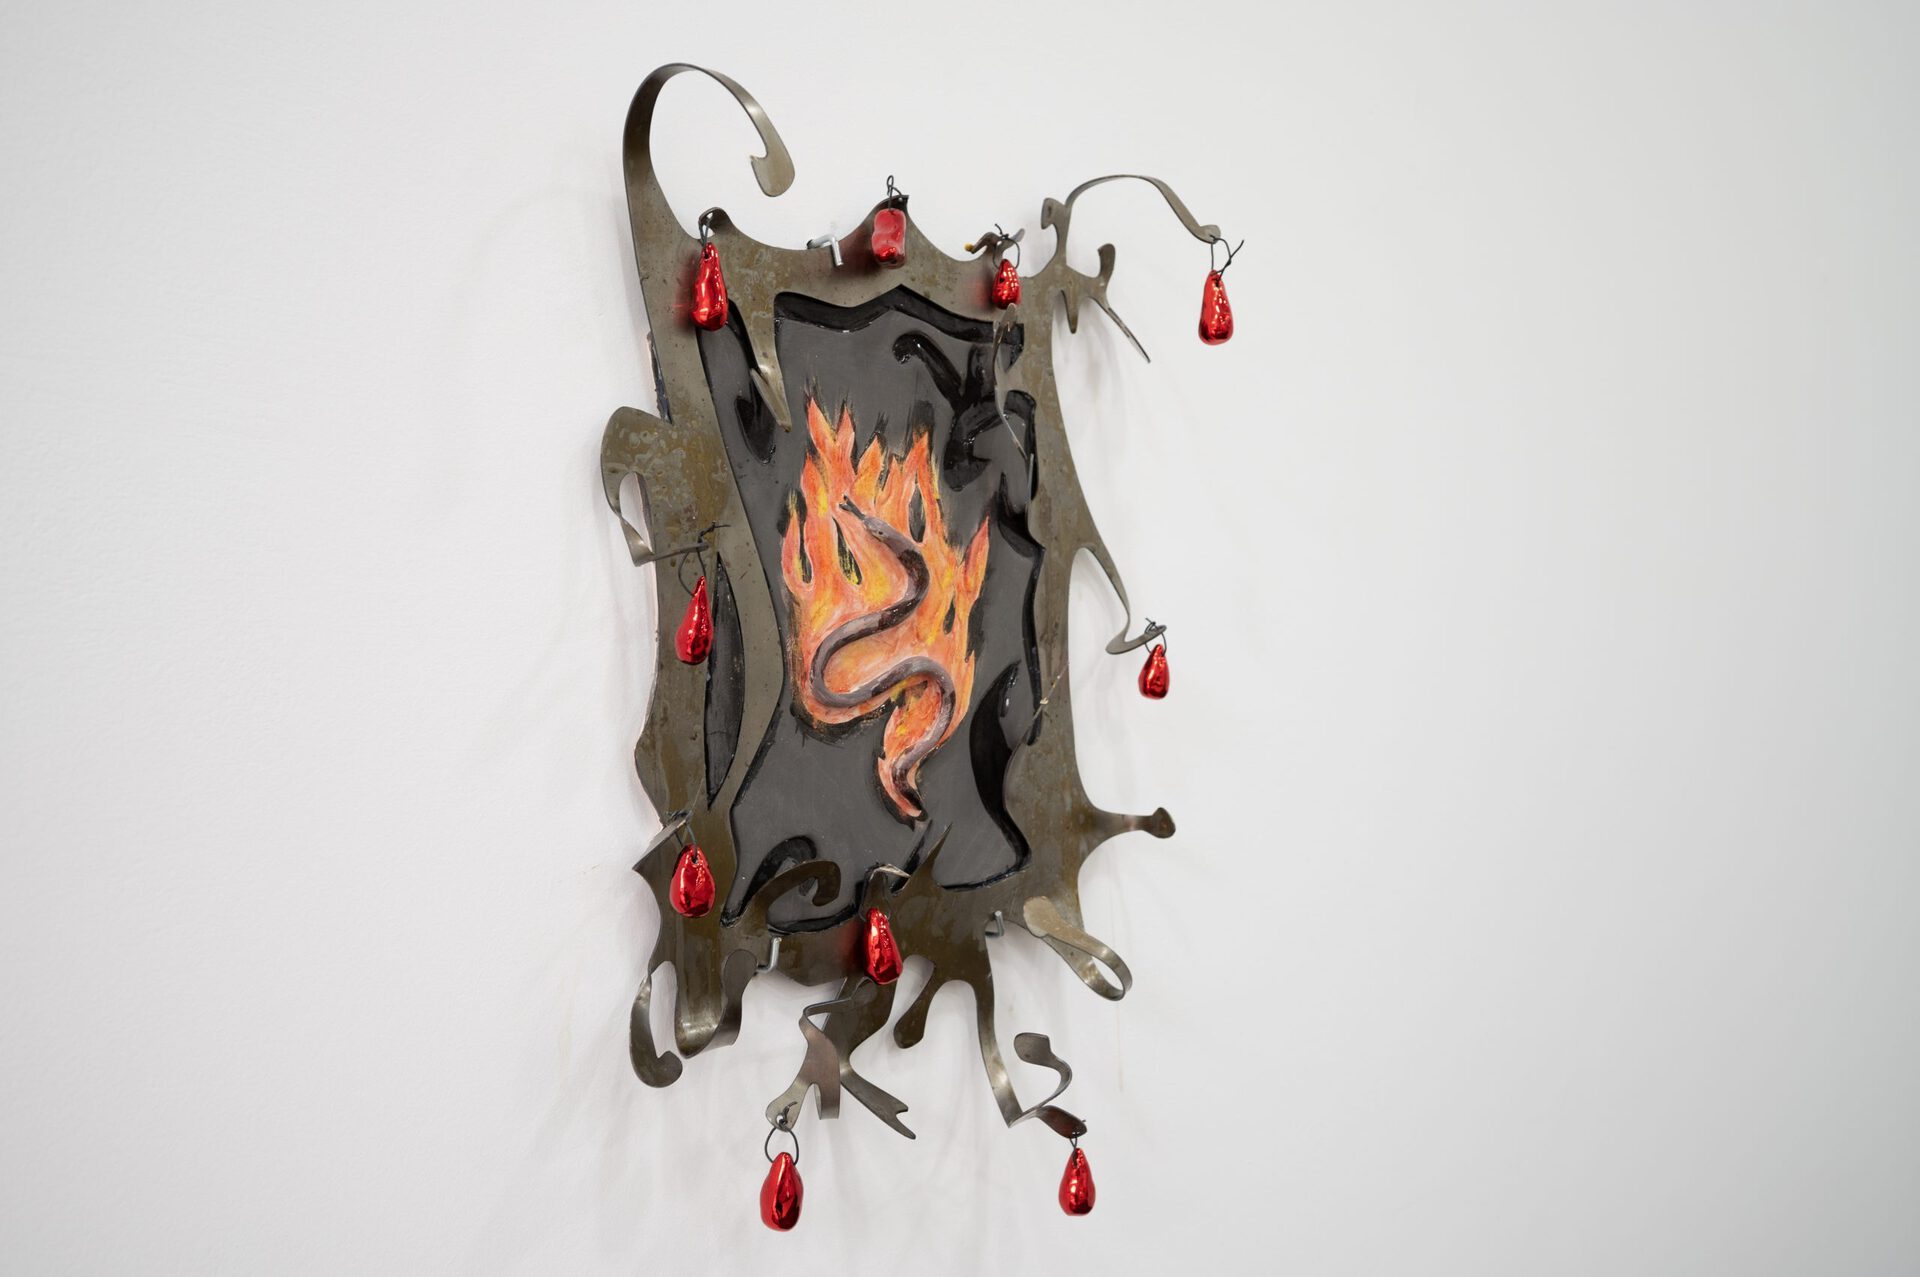 Gvantsa Jishkariani, UNGRATEFUL CUNTS BURNING IN THE FIRE I SET UP, 2022 Metal plate, glazed ceramics, chrome ceramic beads on metal hangers 35 x 53 x 11,5 cm, details